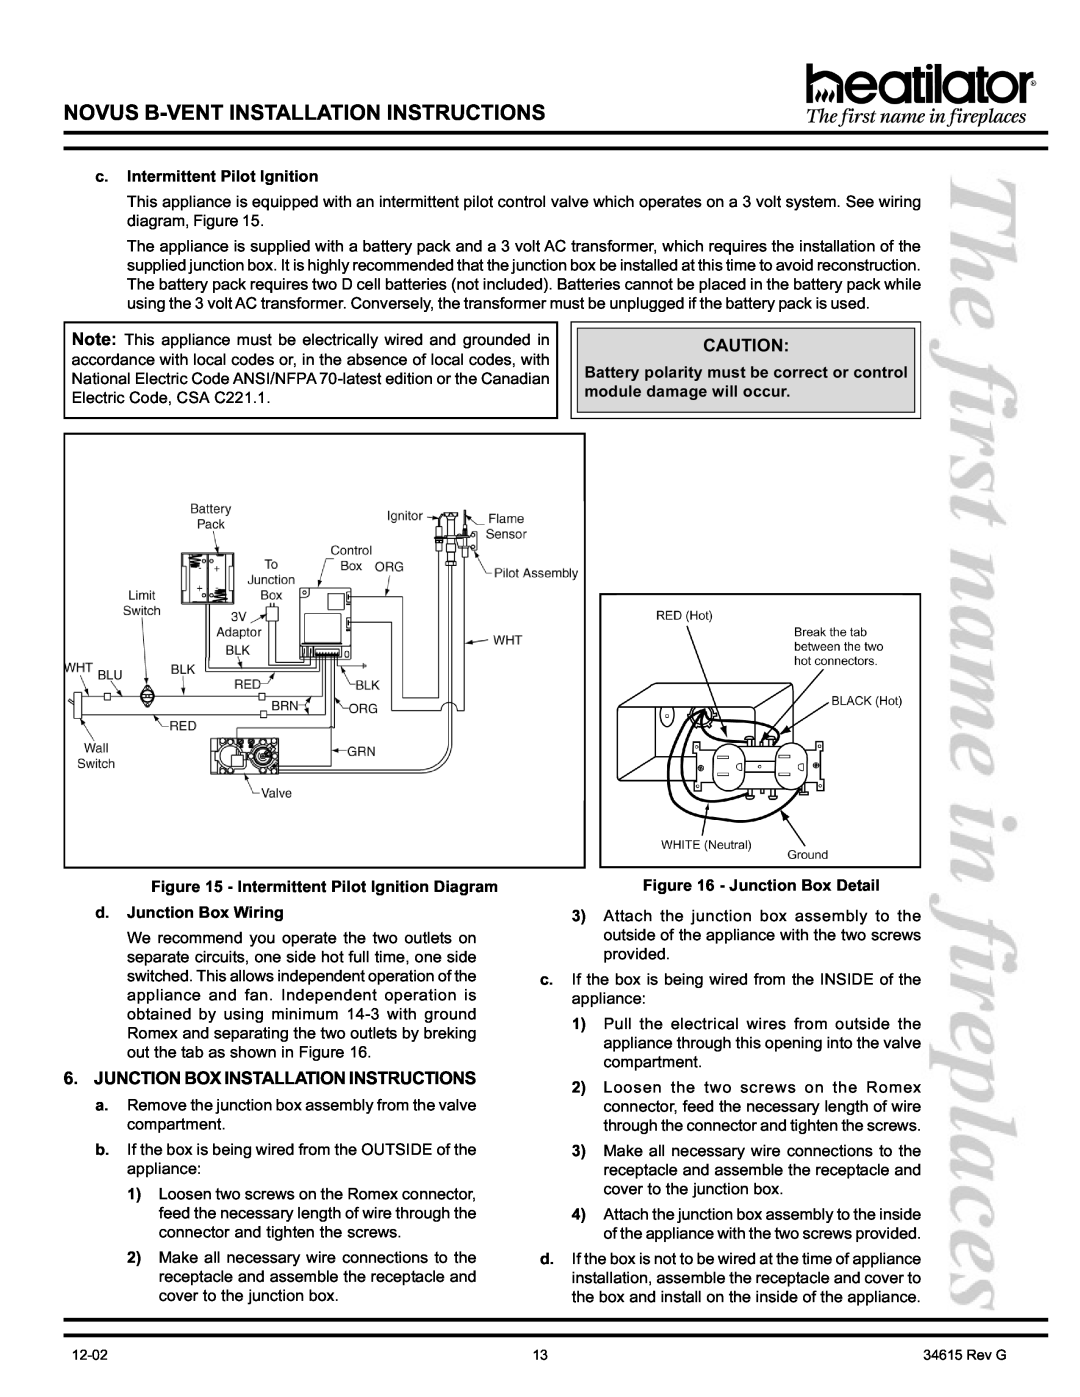 Hearth and Home Technologies GNBC36, GNBC30 Junction Box Installation Instructions, Novus B-Ventinstallation Instructions 